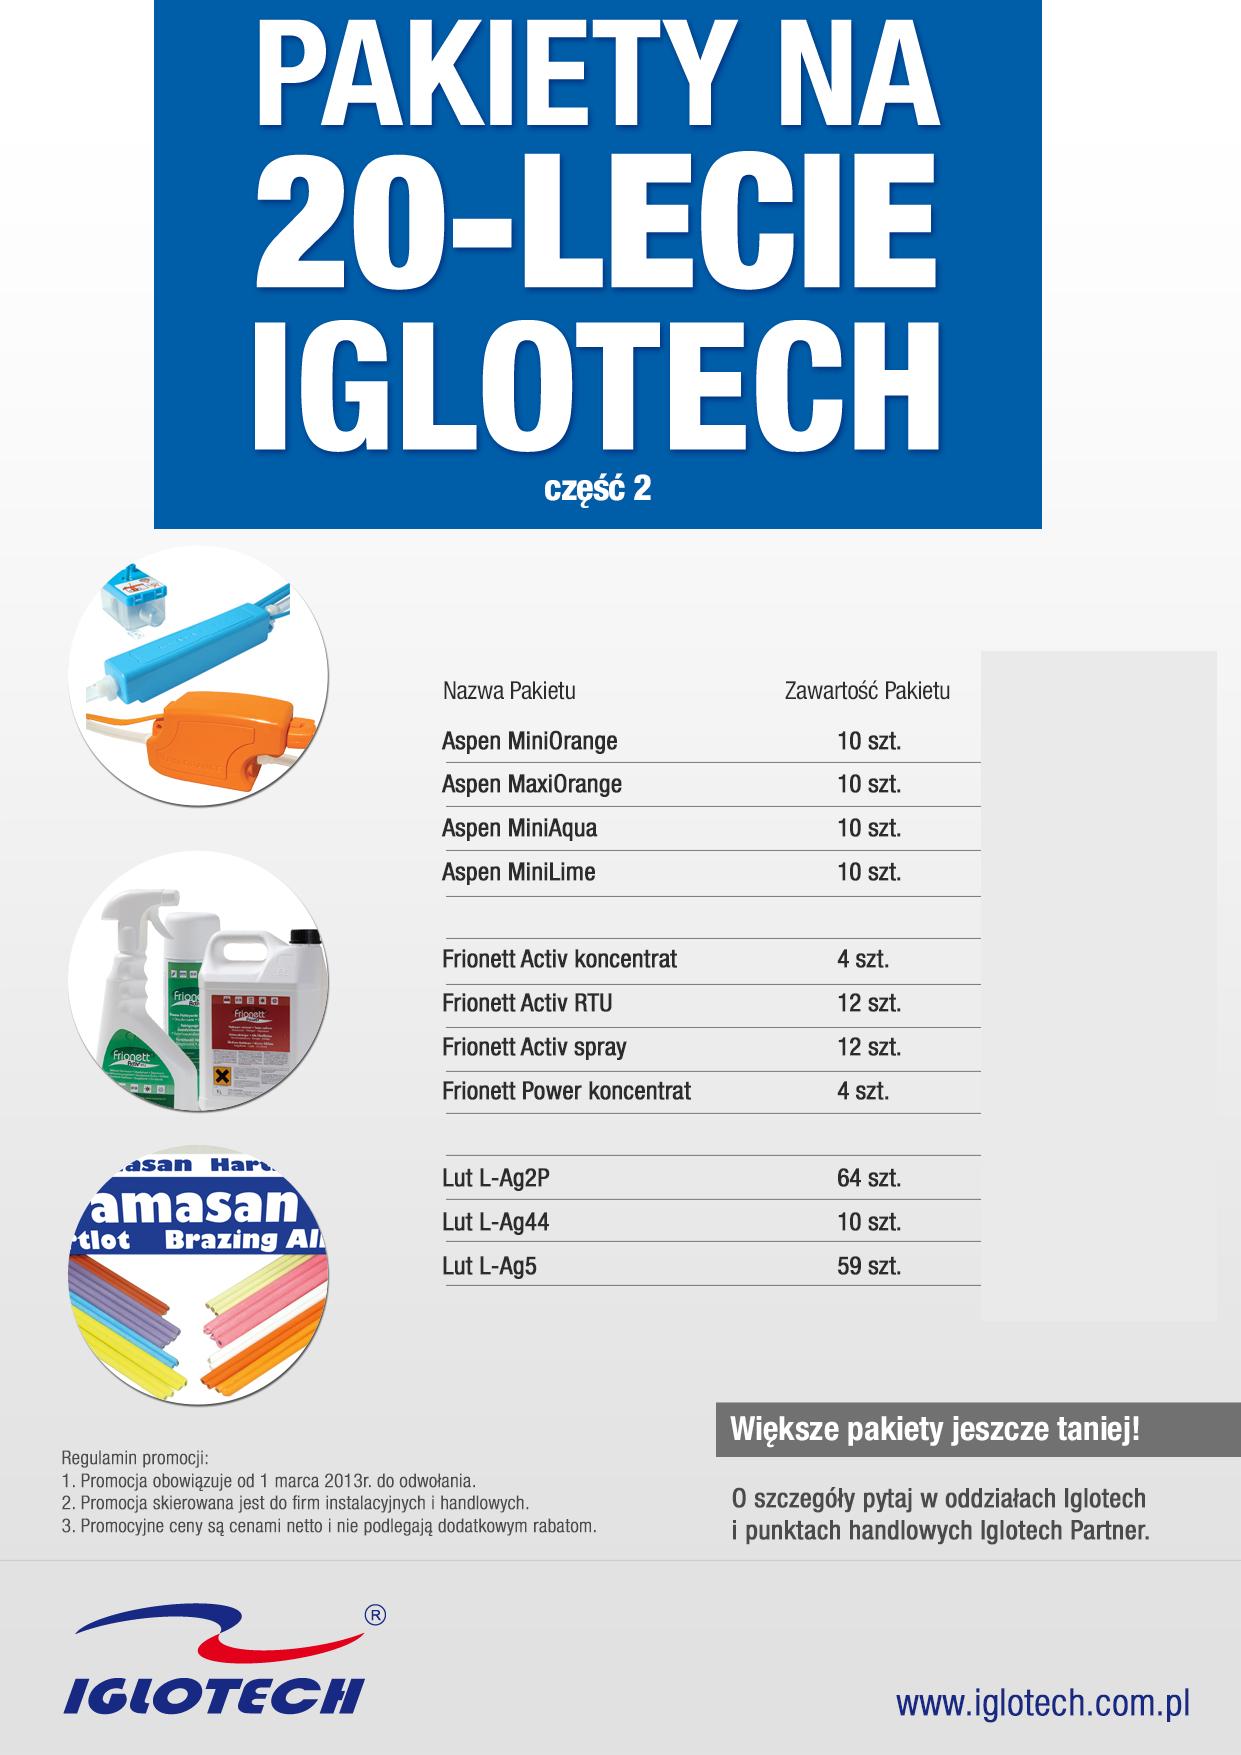 Iglotech - 20-lecie